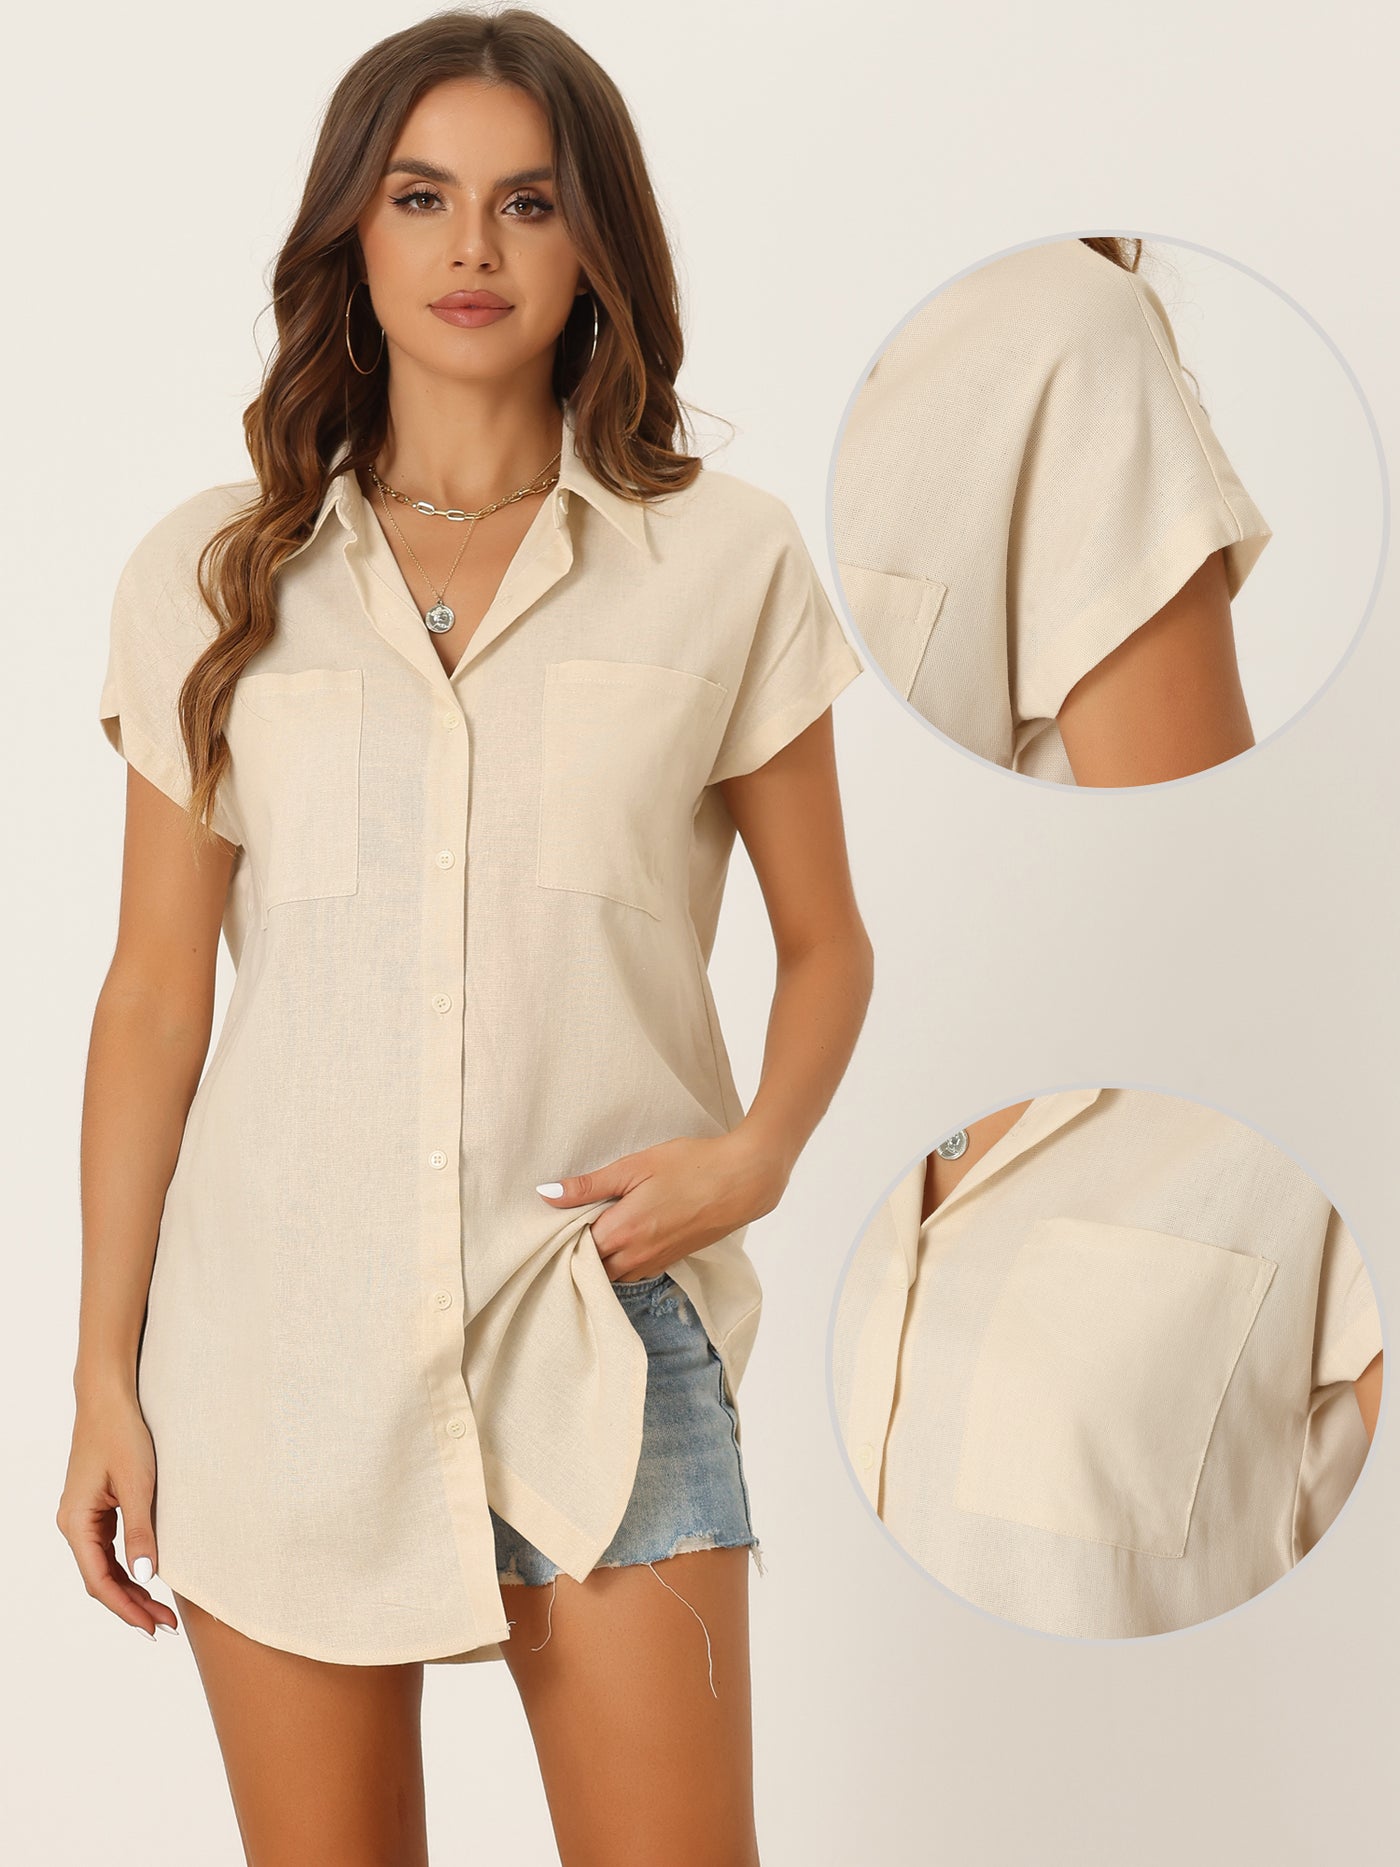 Allegra K Button Down Shirt Office Casual V Neck Pockets Short Sleeve Blouse Tops